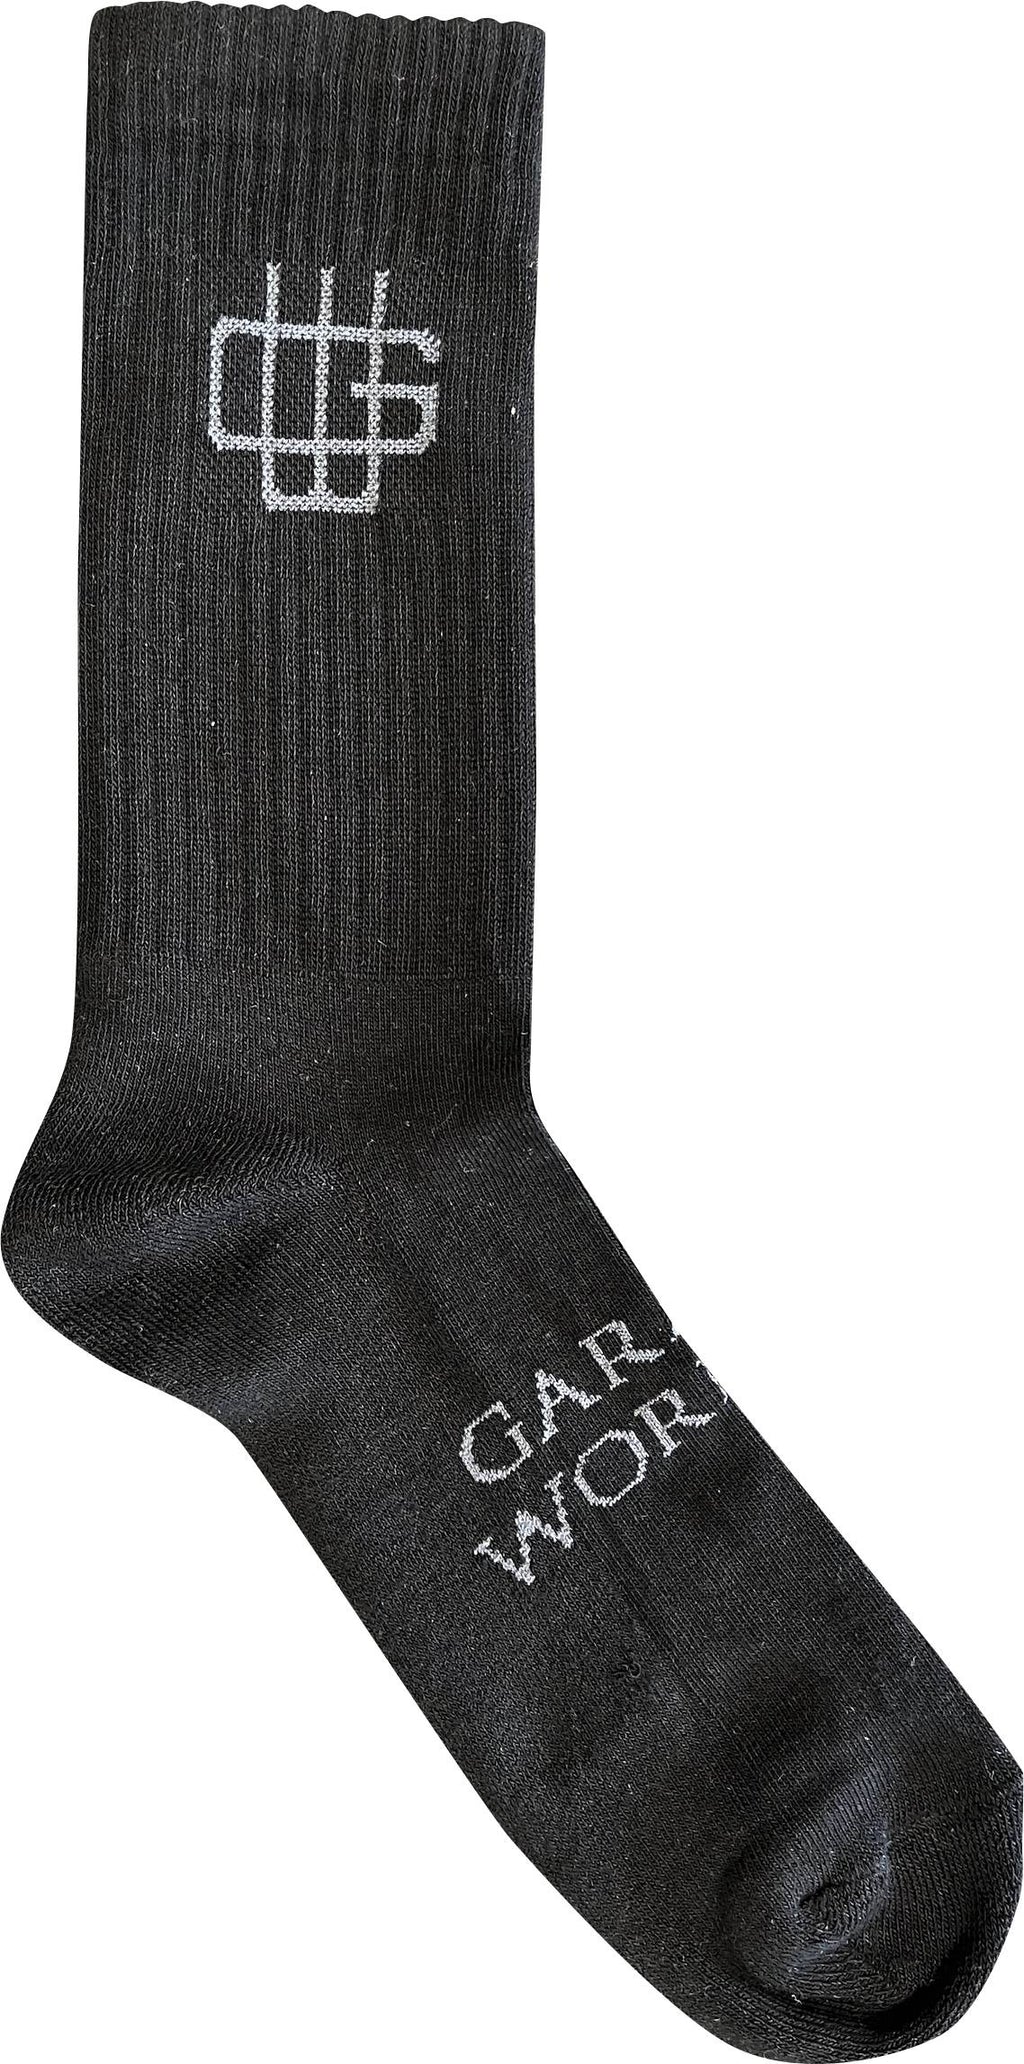  Garment Workshop Calze Socks Unisex Chaos Black Uomo Nero